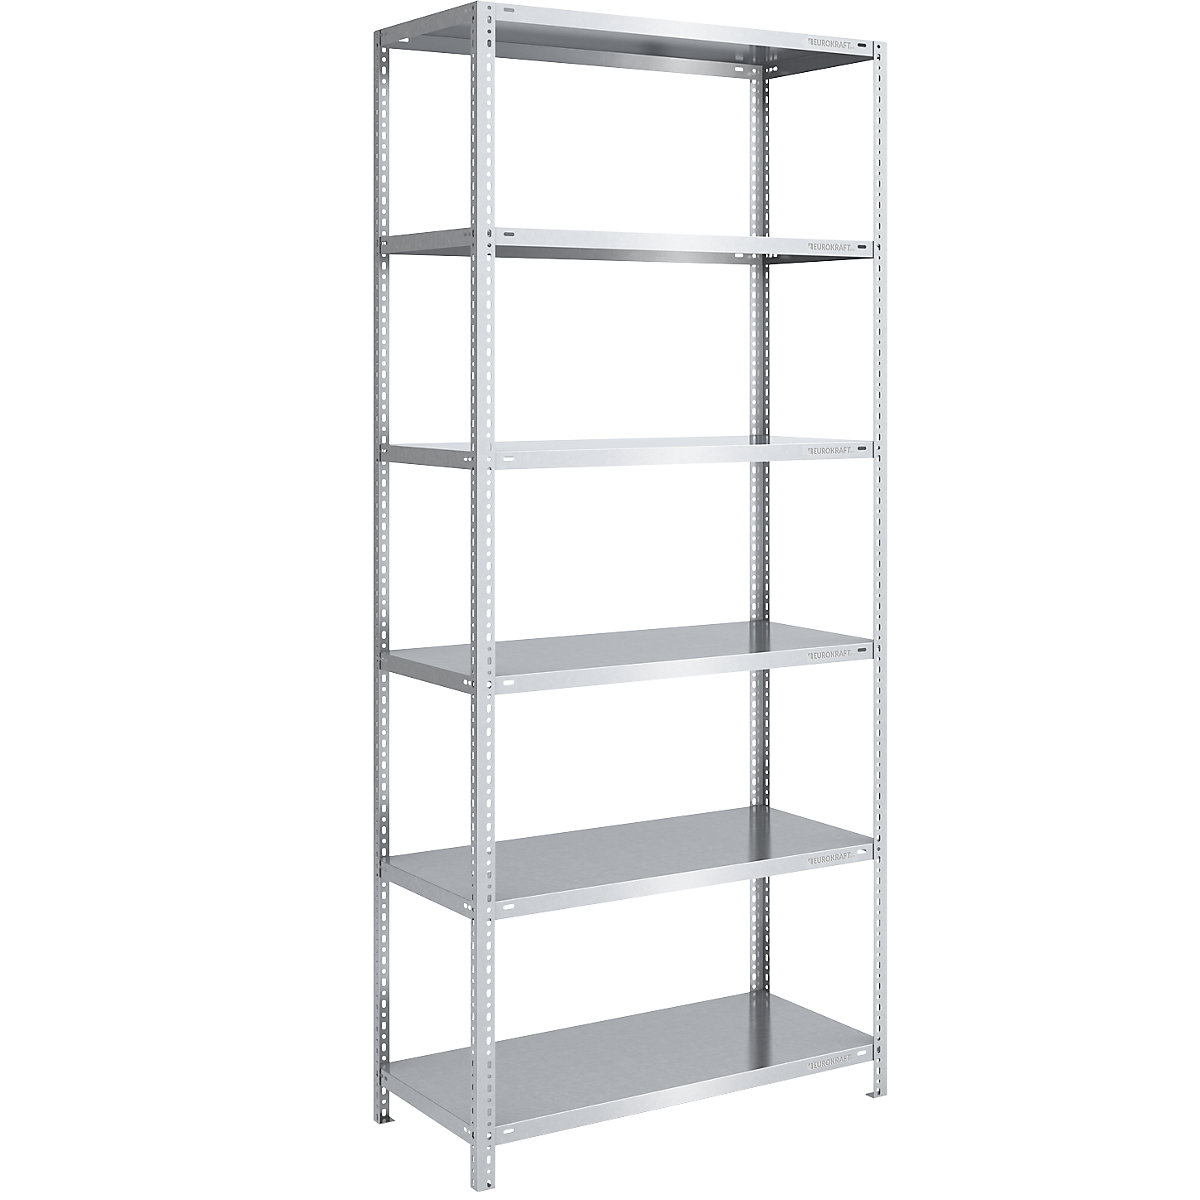 Bolt-together shelf unit, light duty, zinc plated – eurokraft pro, shelf unit height 2500 mm, shelf width 1000 mm, depth 600 mm, standard shelf unit-8